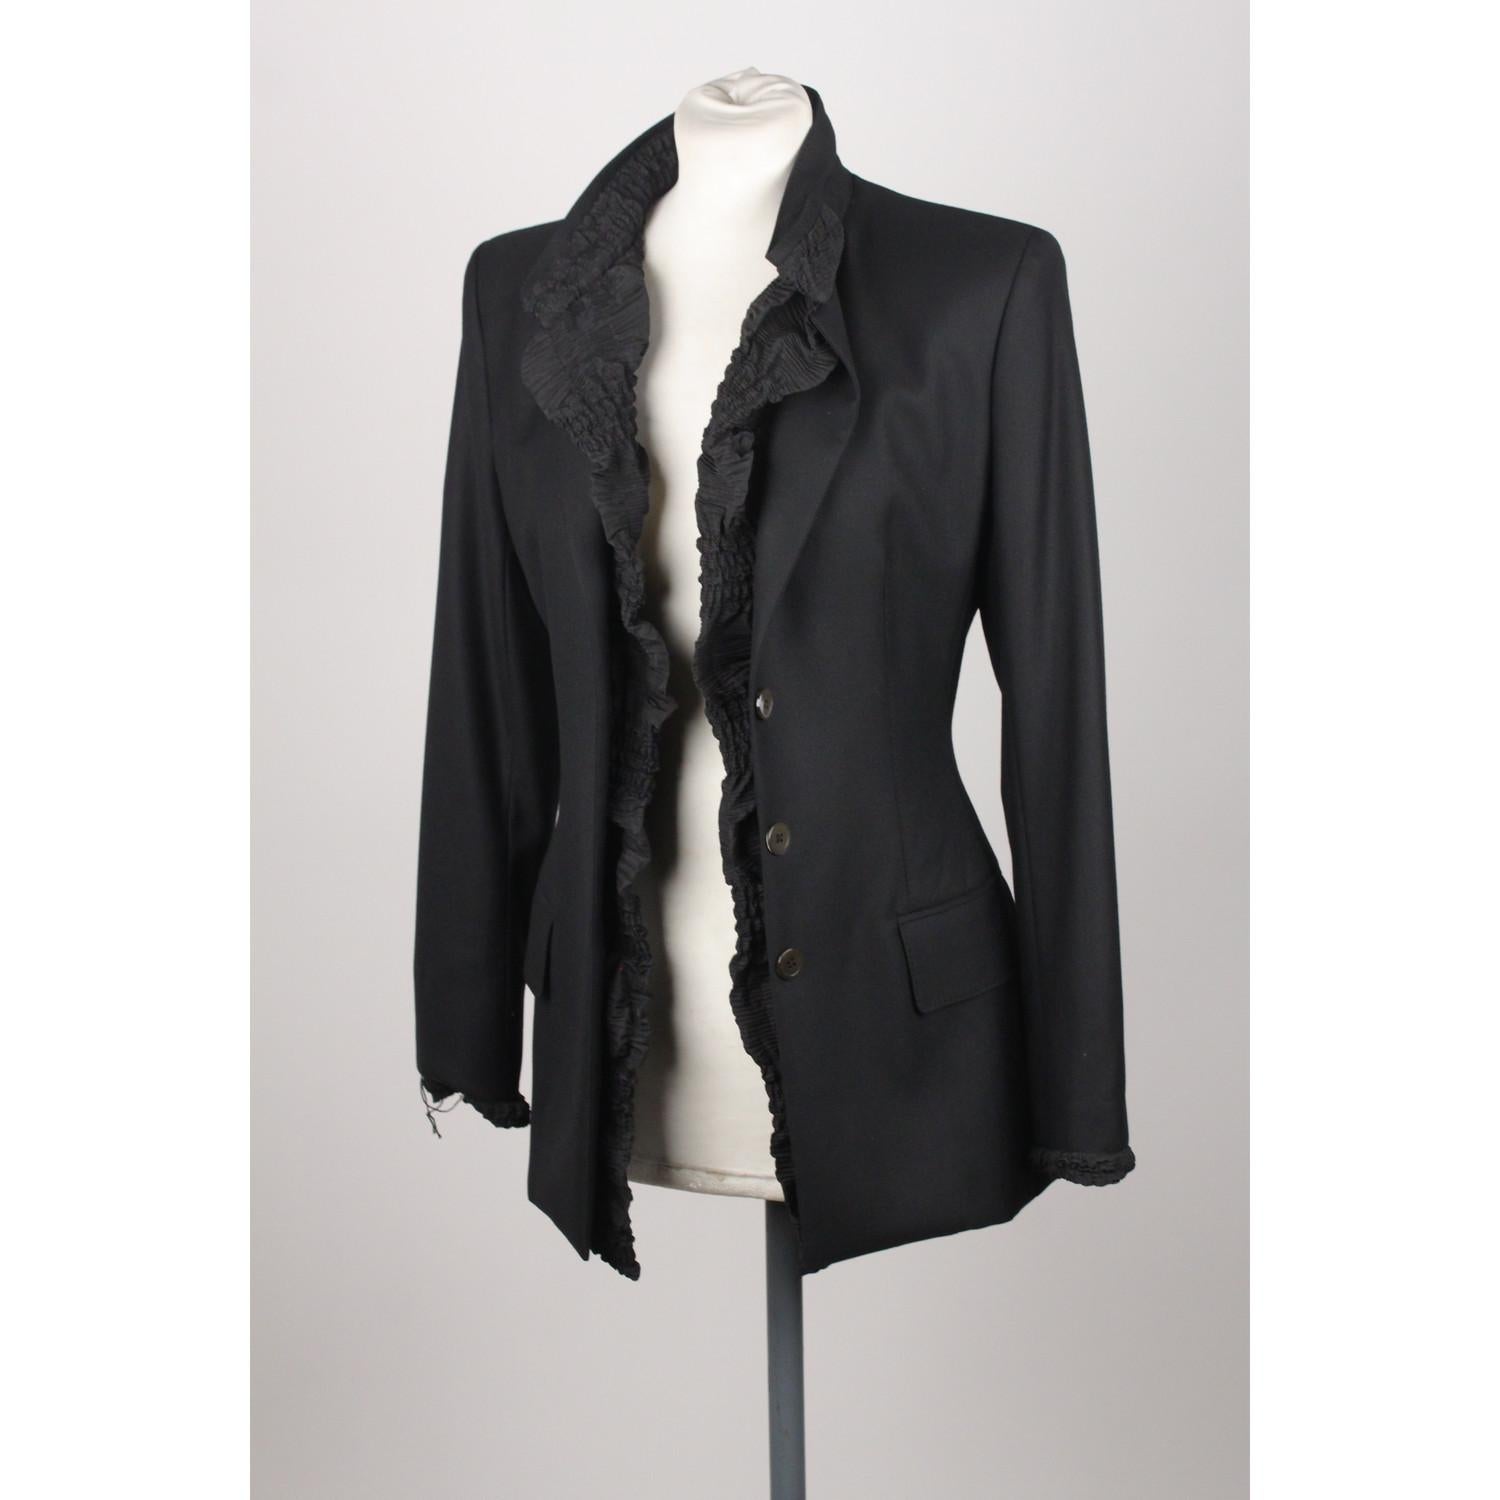 Yves Saint Laurent Black Wool Pant Suit with Ruffles Size 36 6